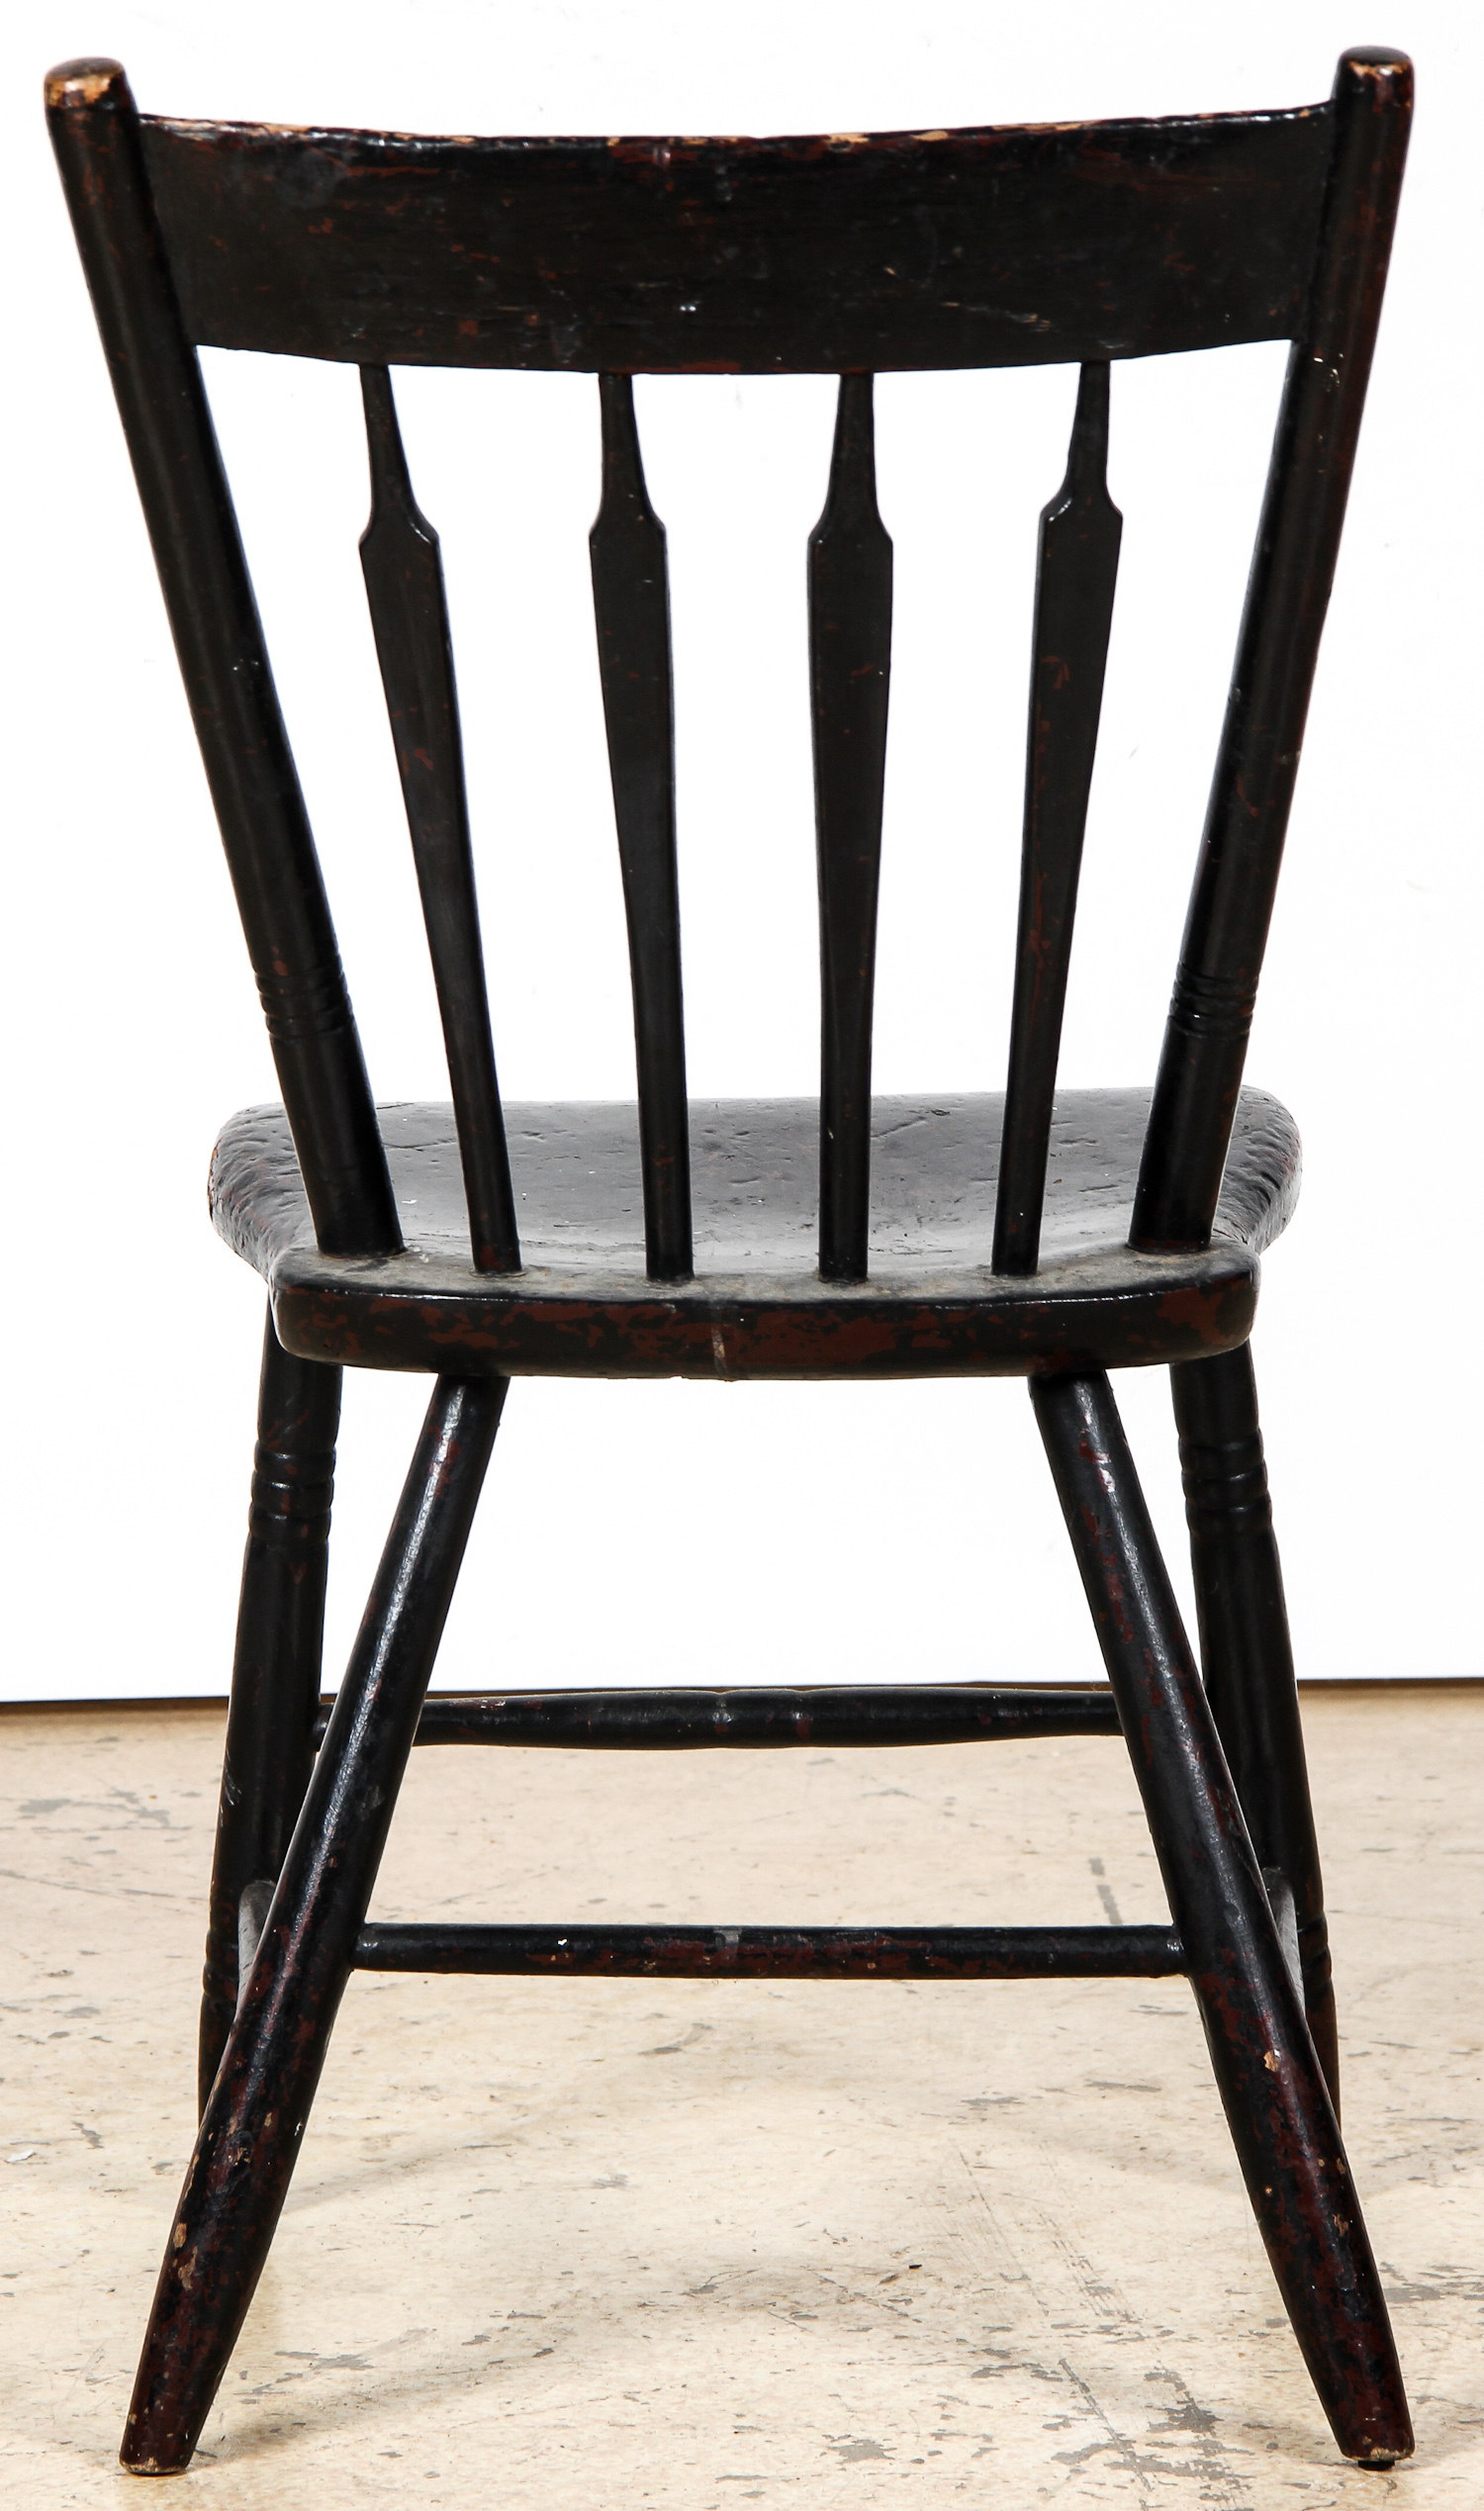 5 Antique Windsor Chairs. Each Size: 32" x 17.25" x 16" (81 x 44 x 41 cm). Provenance: Kristina - Image 4 of 4